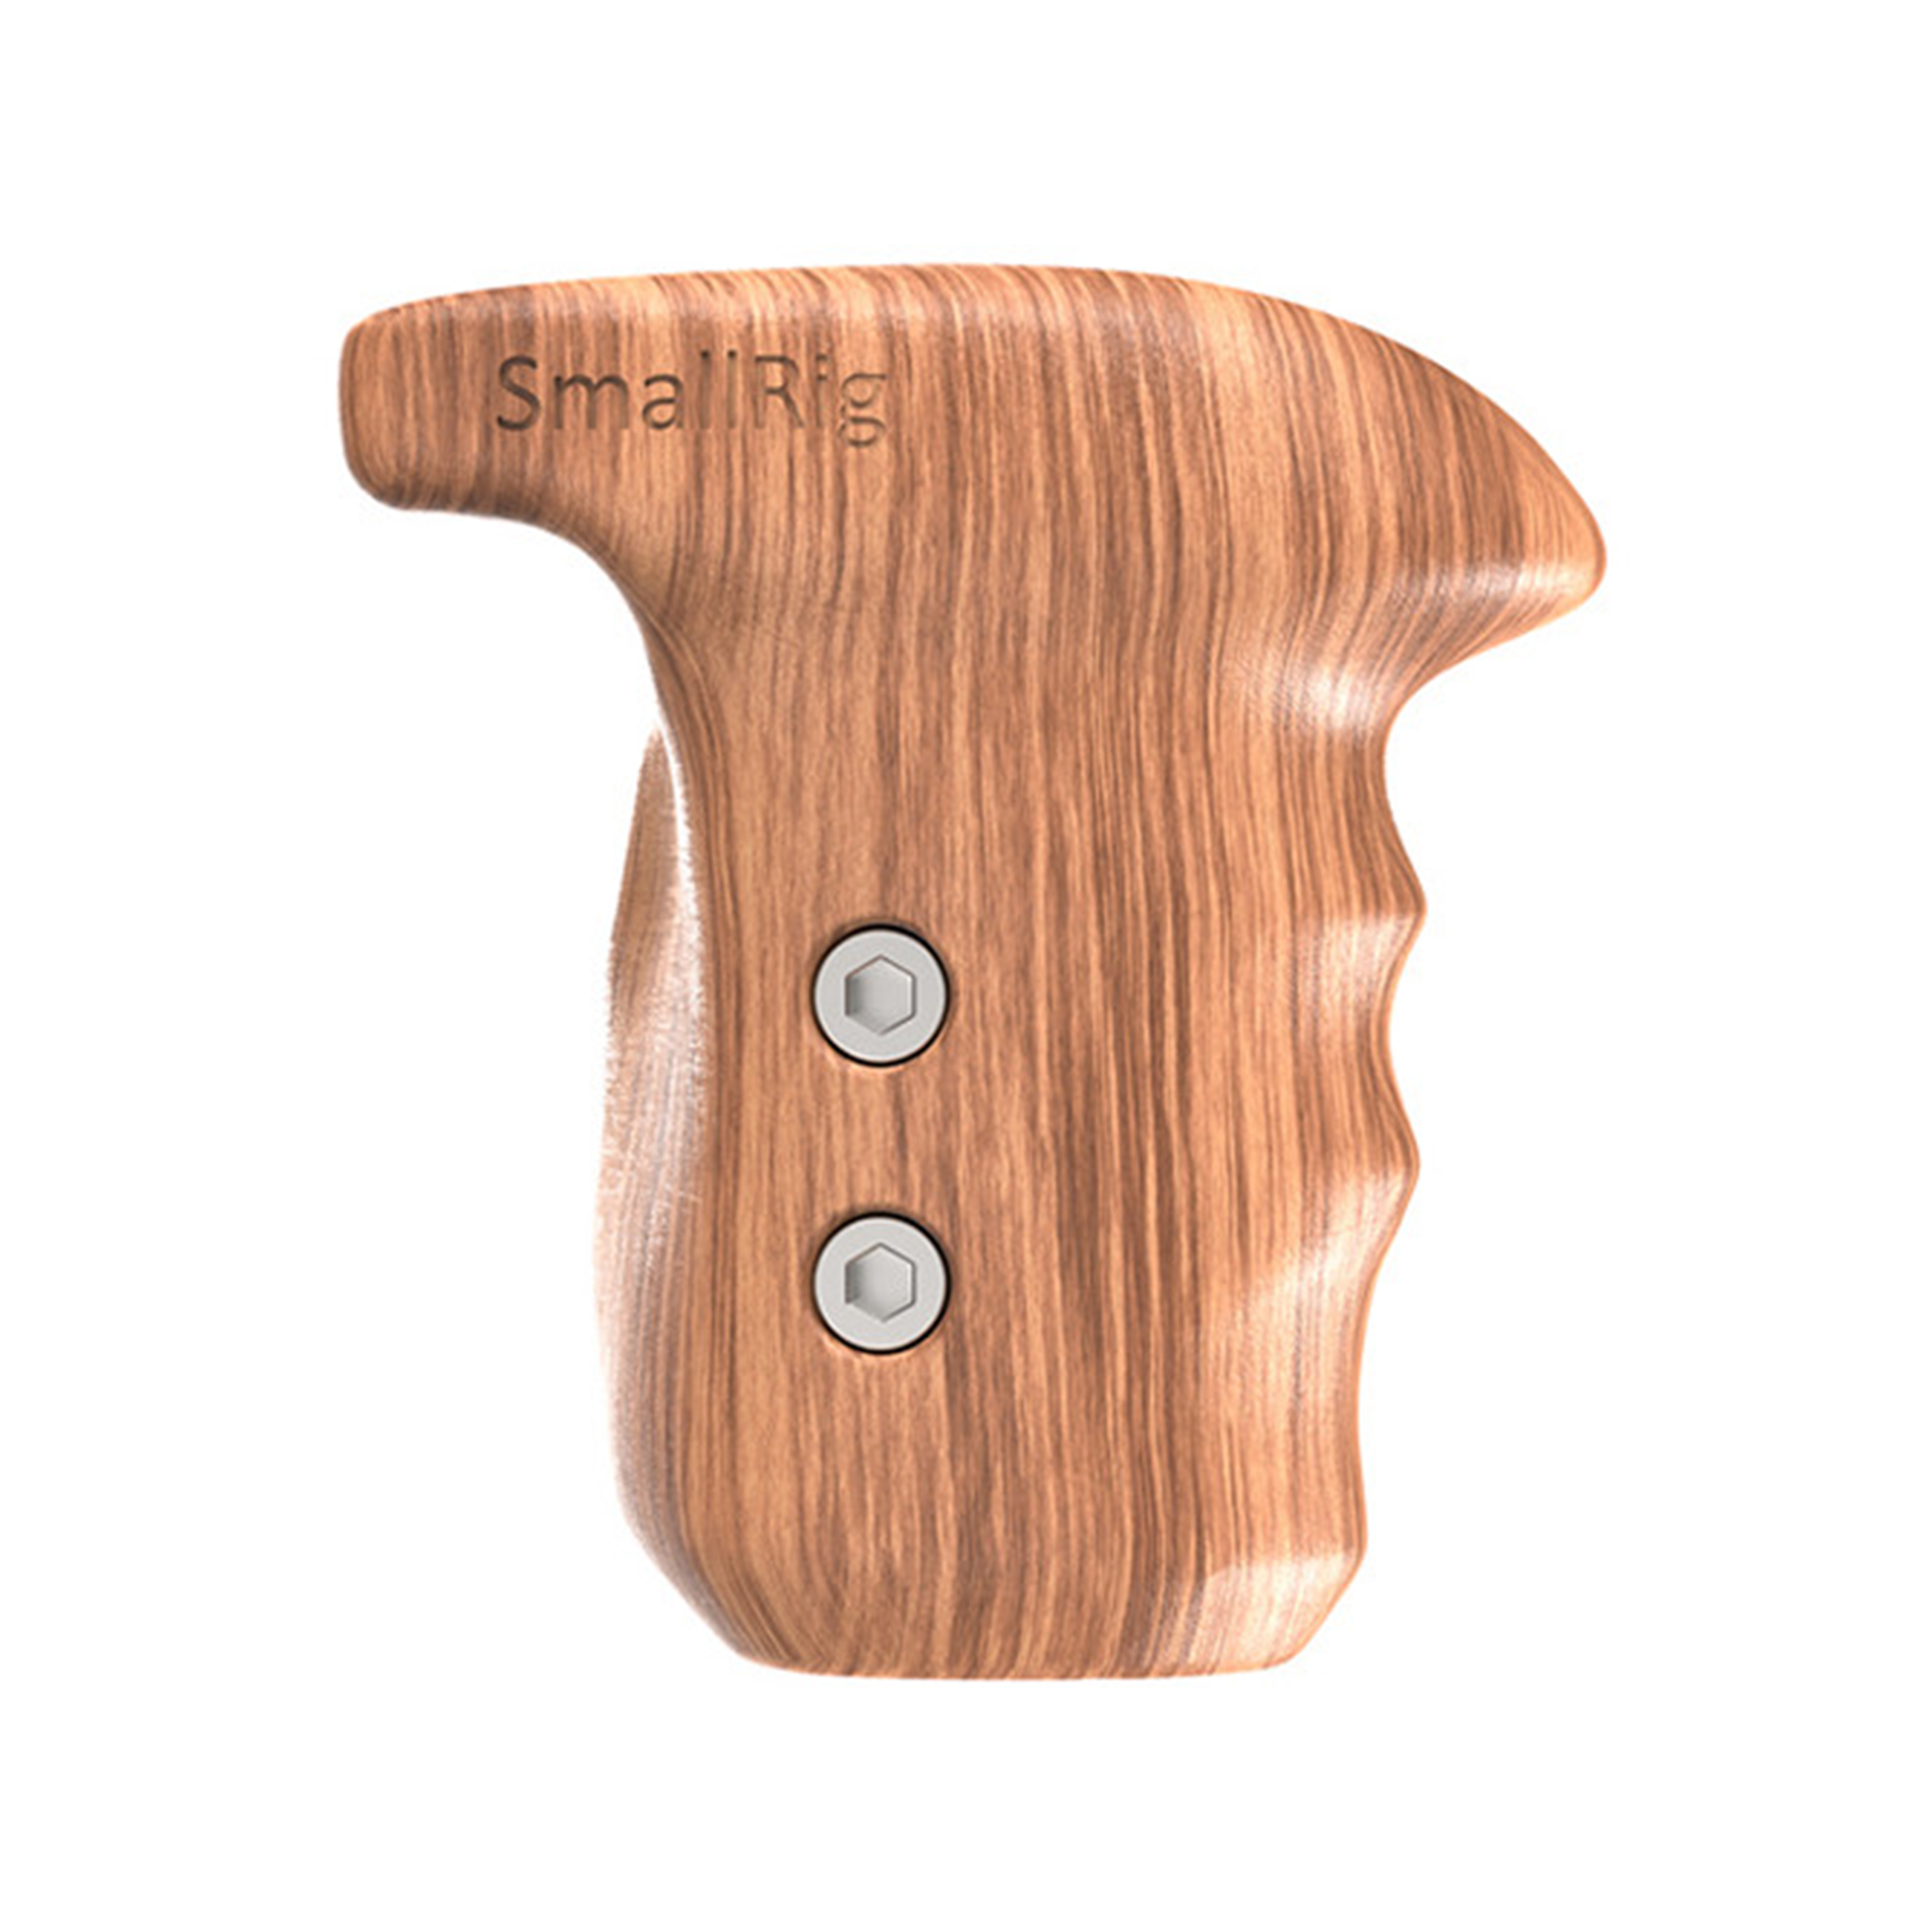 SmallRig Right-Side Wooden Handgrip with ARRI-Standard Rosette